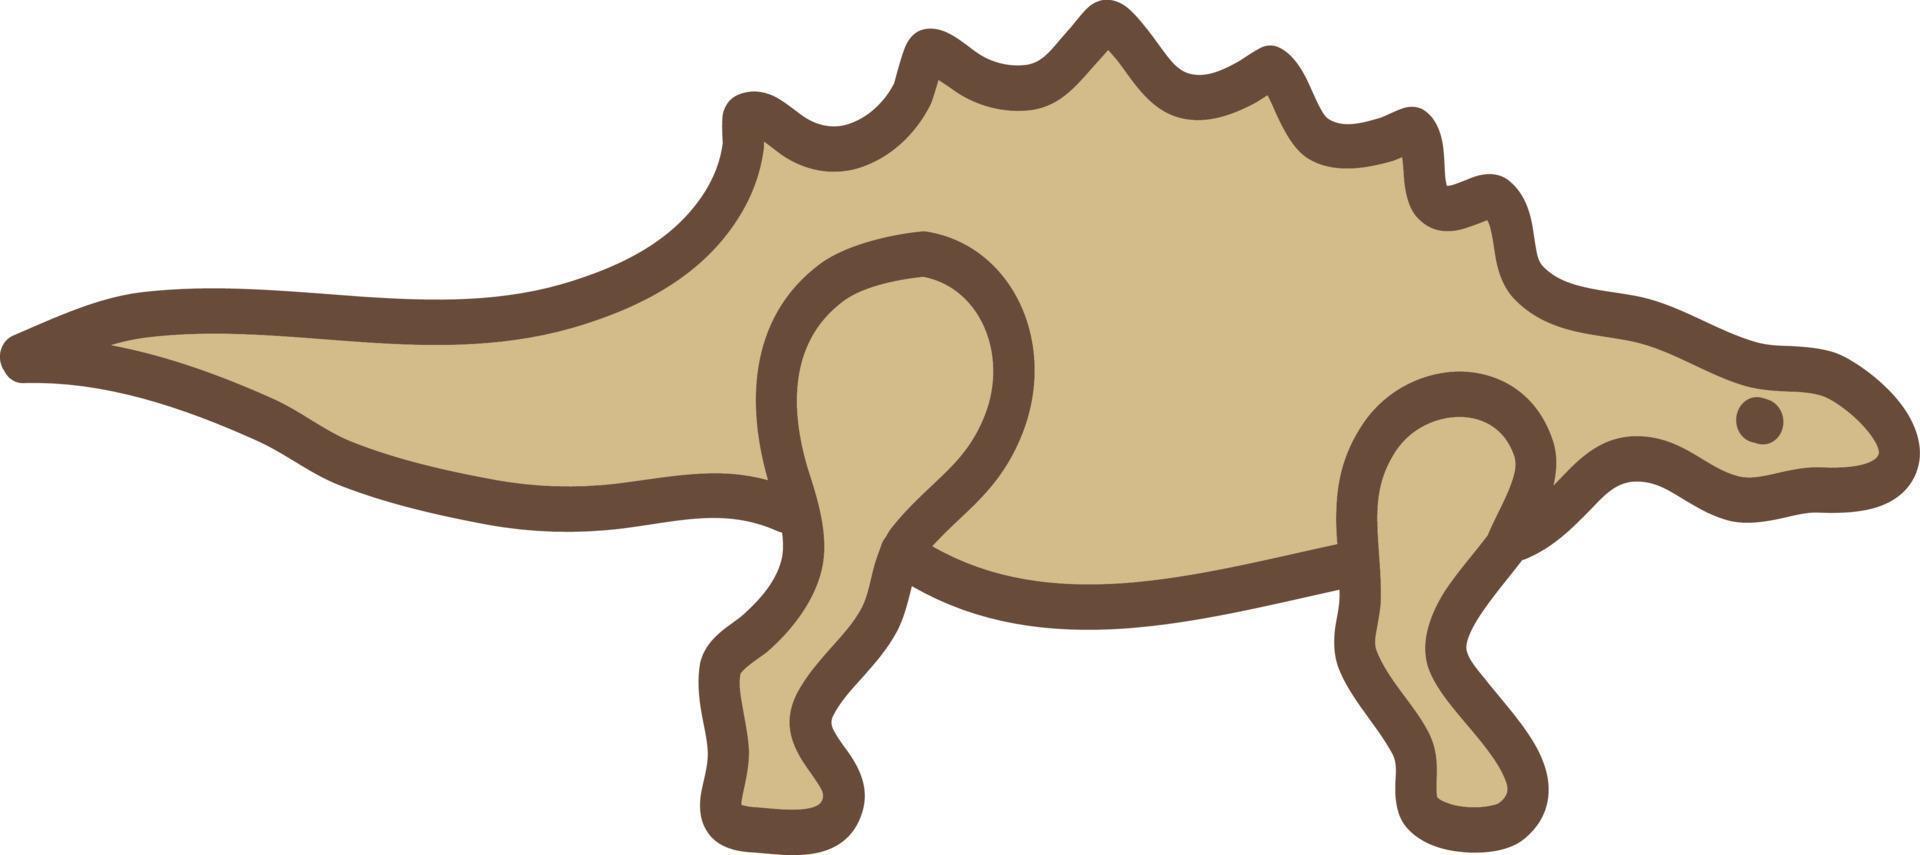 Brown dinosaur, illustration, vector on a white background.